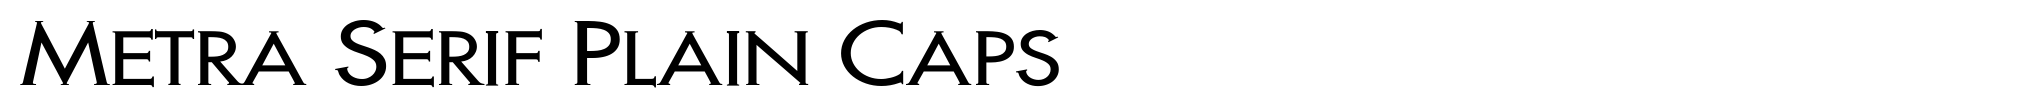 Metra Serif Plain Caps image